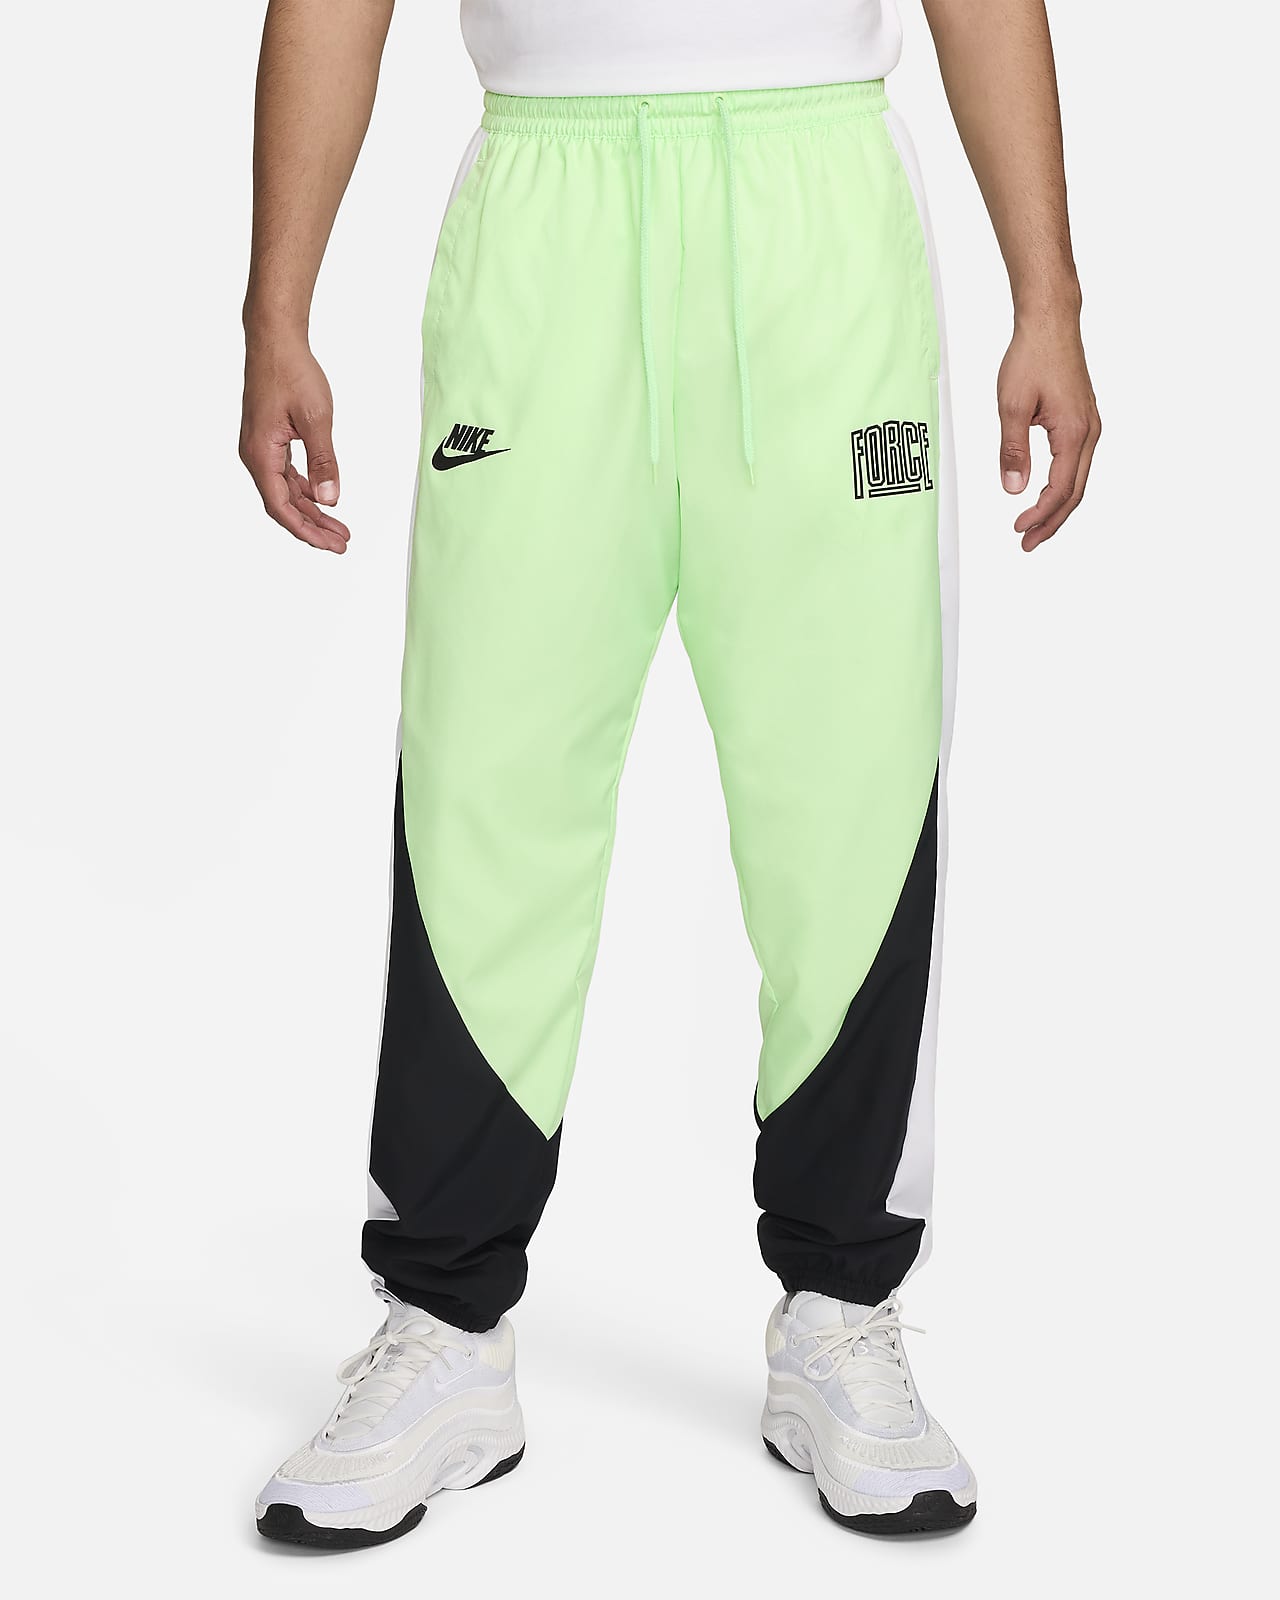 Nike Starting 5 Pantalons de bàsquet - Home